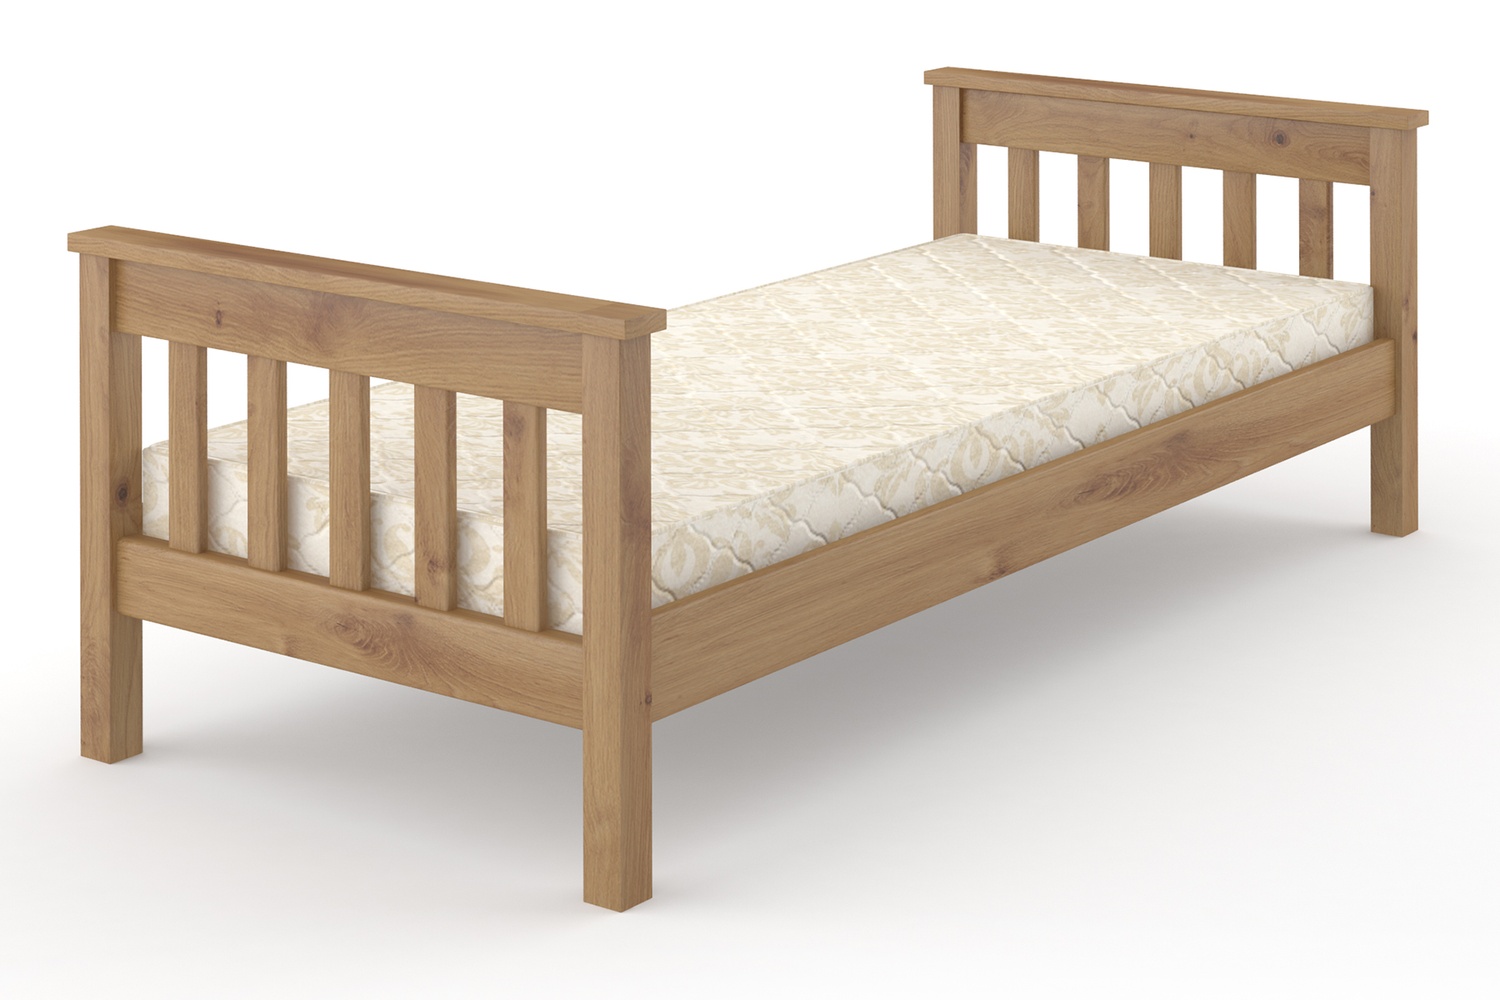 Кровать односпальная Санта-Фе Литл (Skandynaviya) 120х190 см skndnv-ltl-120x190 фото